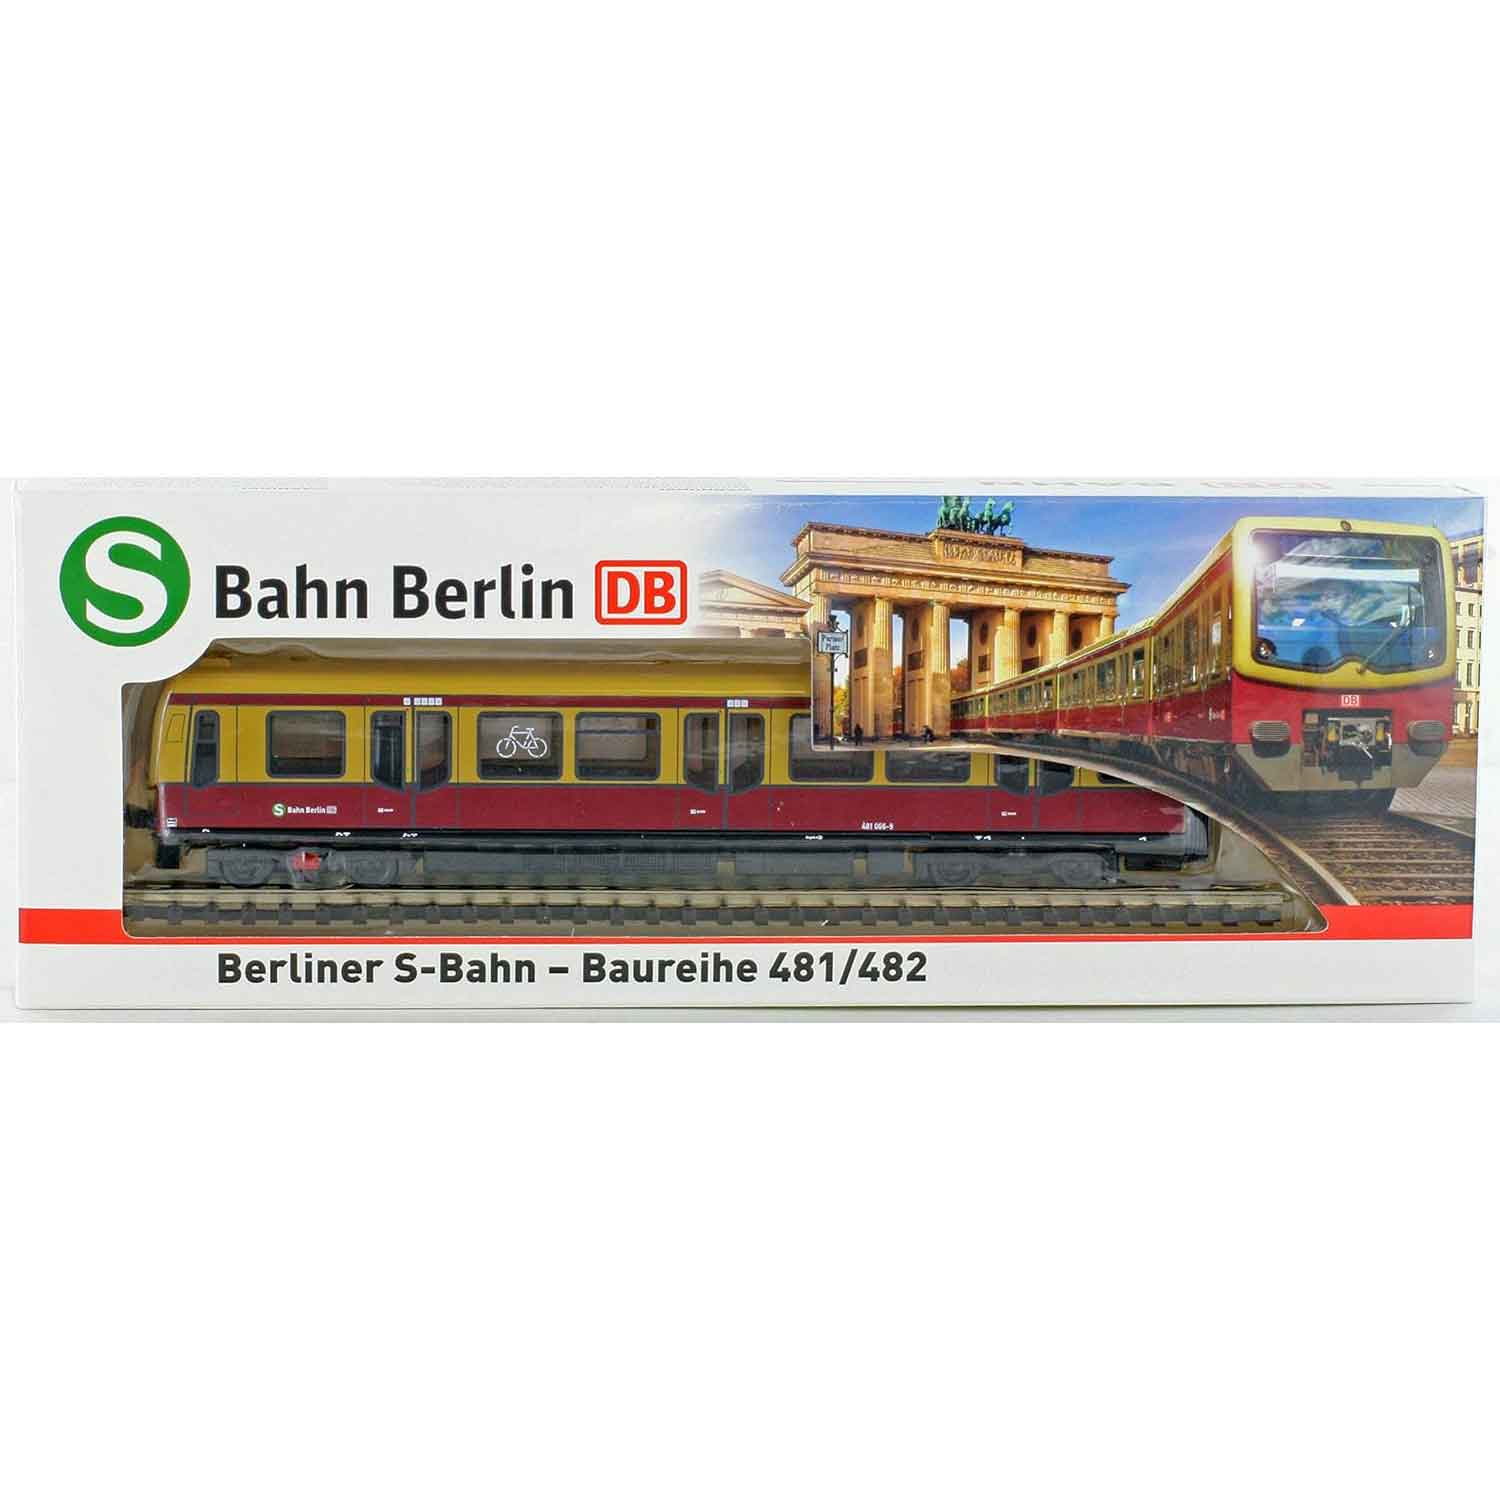 Miniatur S-Bahn Berlin 1:120 BR481 (gelb-rot)